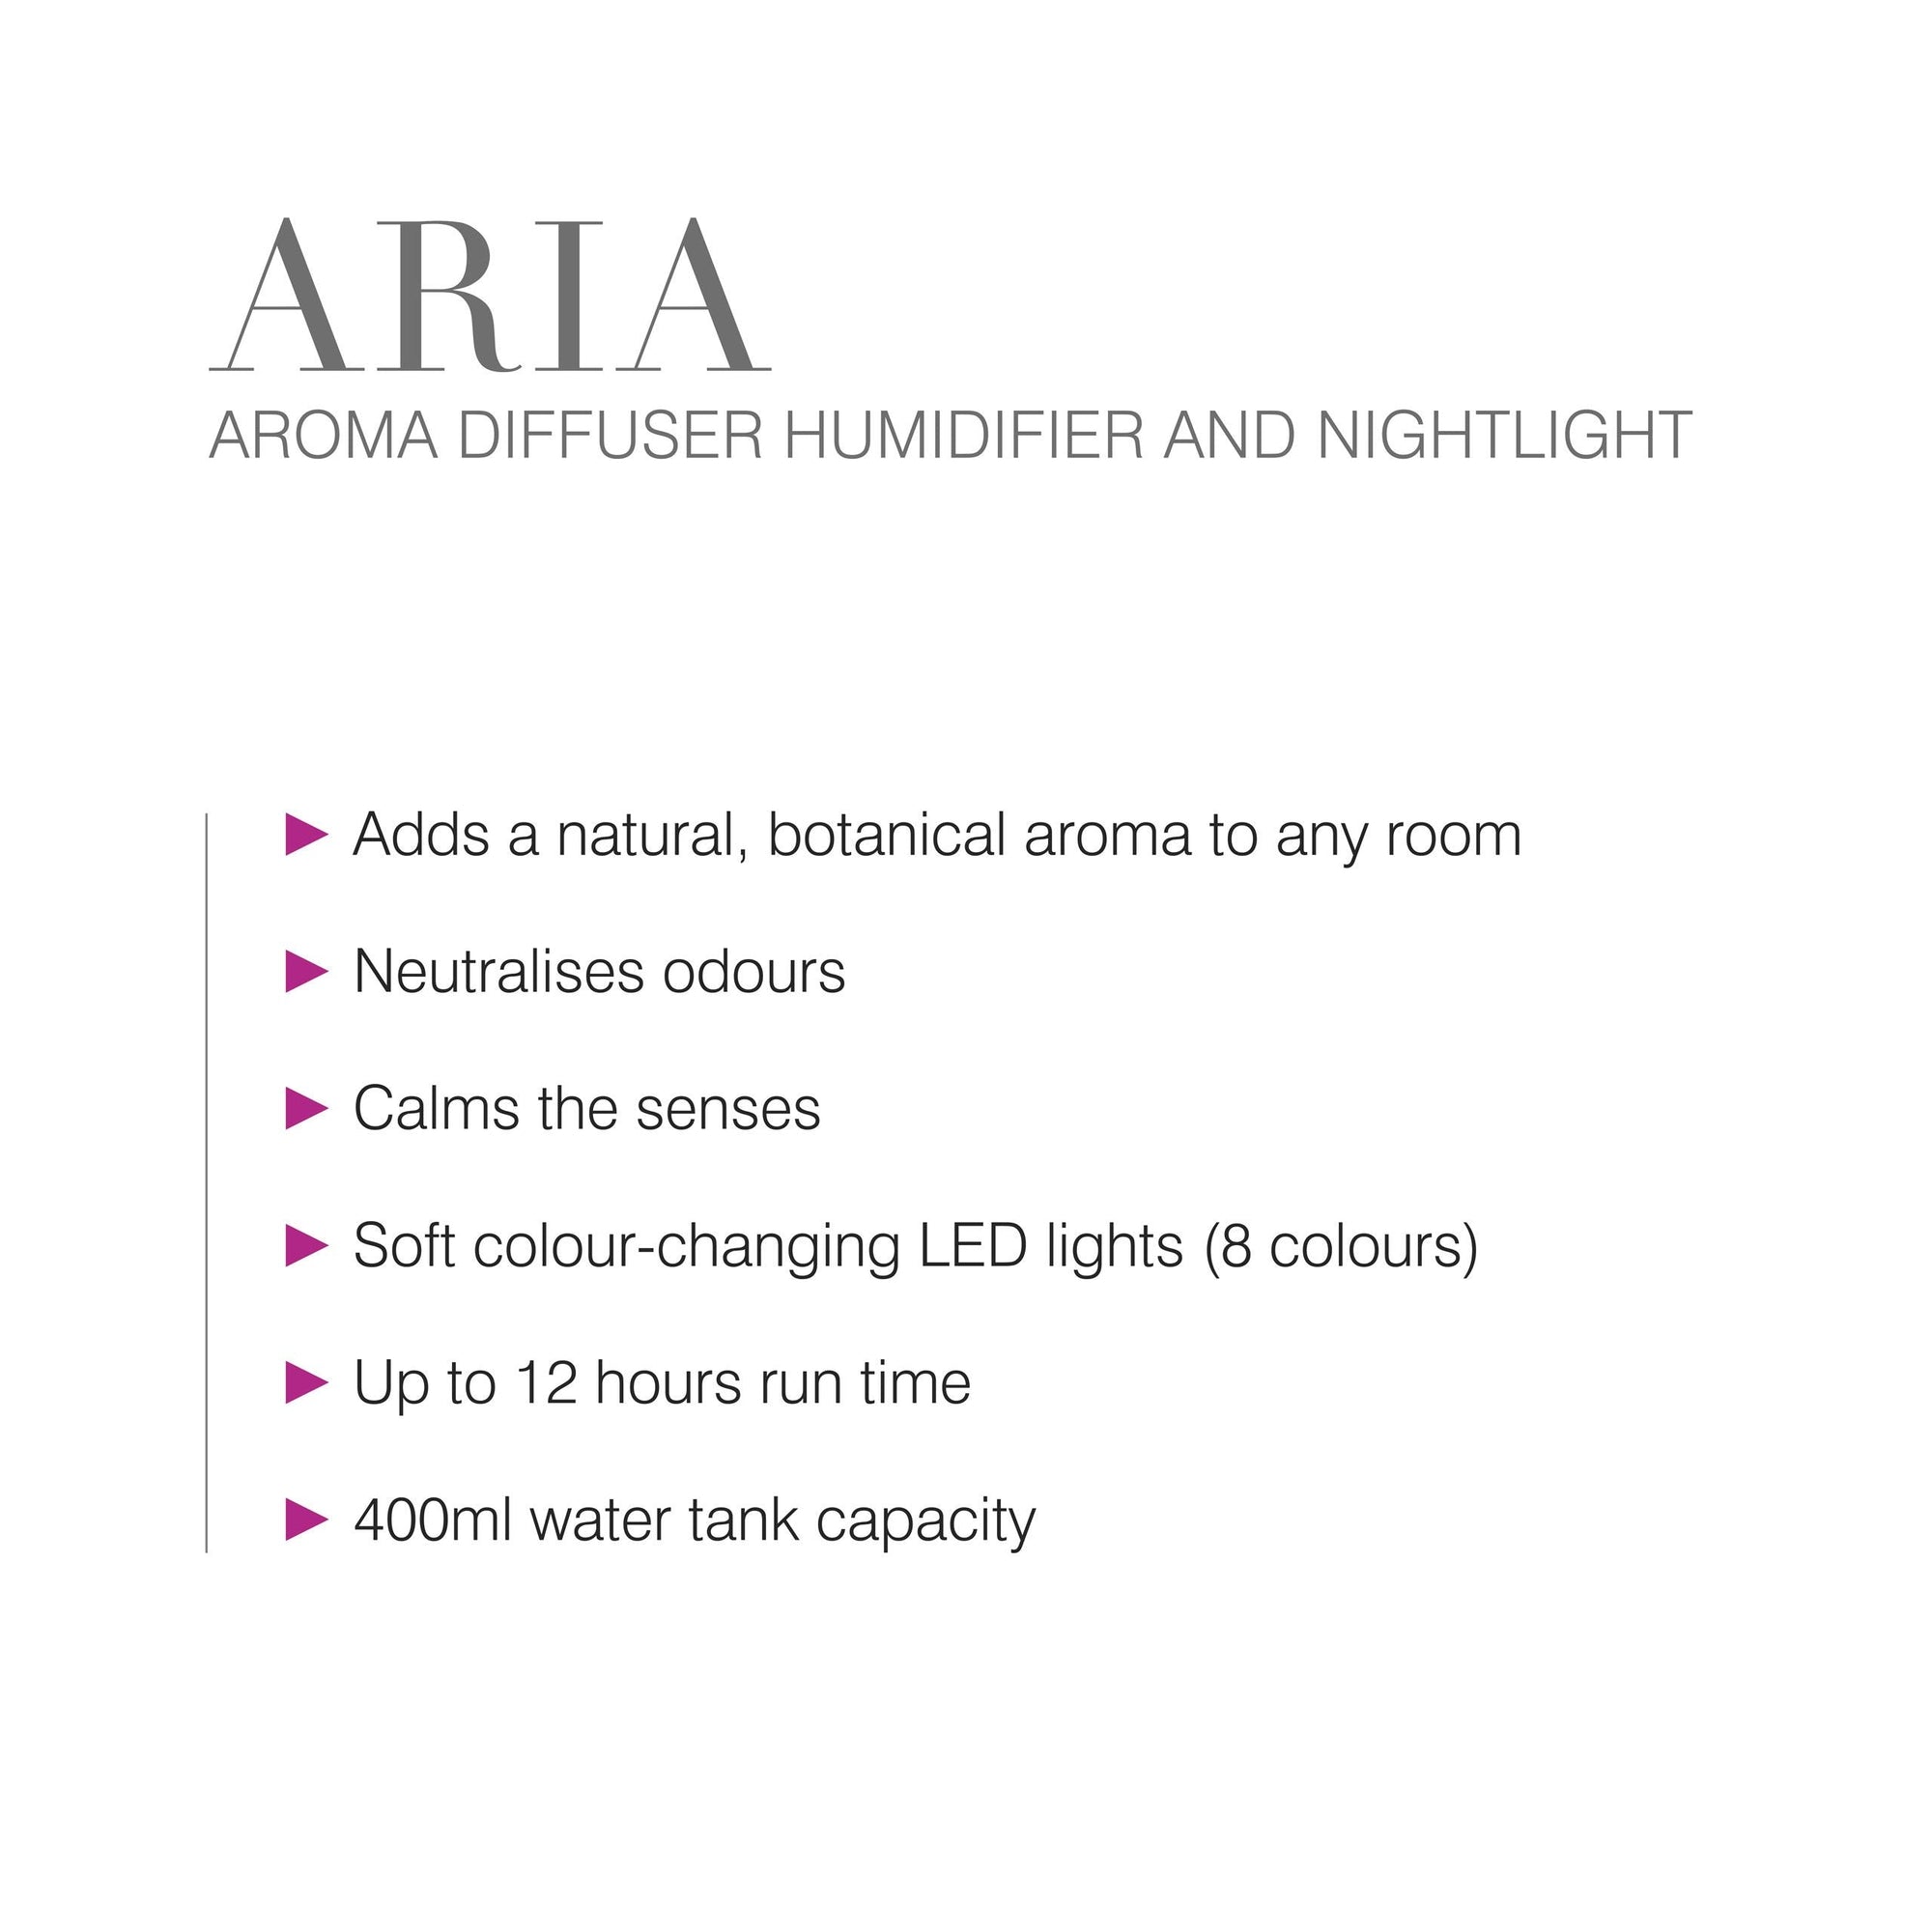 ARIA Aroma Diffuser Humidifier and Nightlight